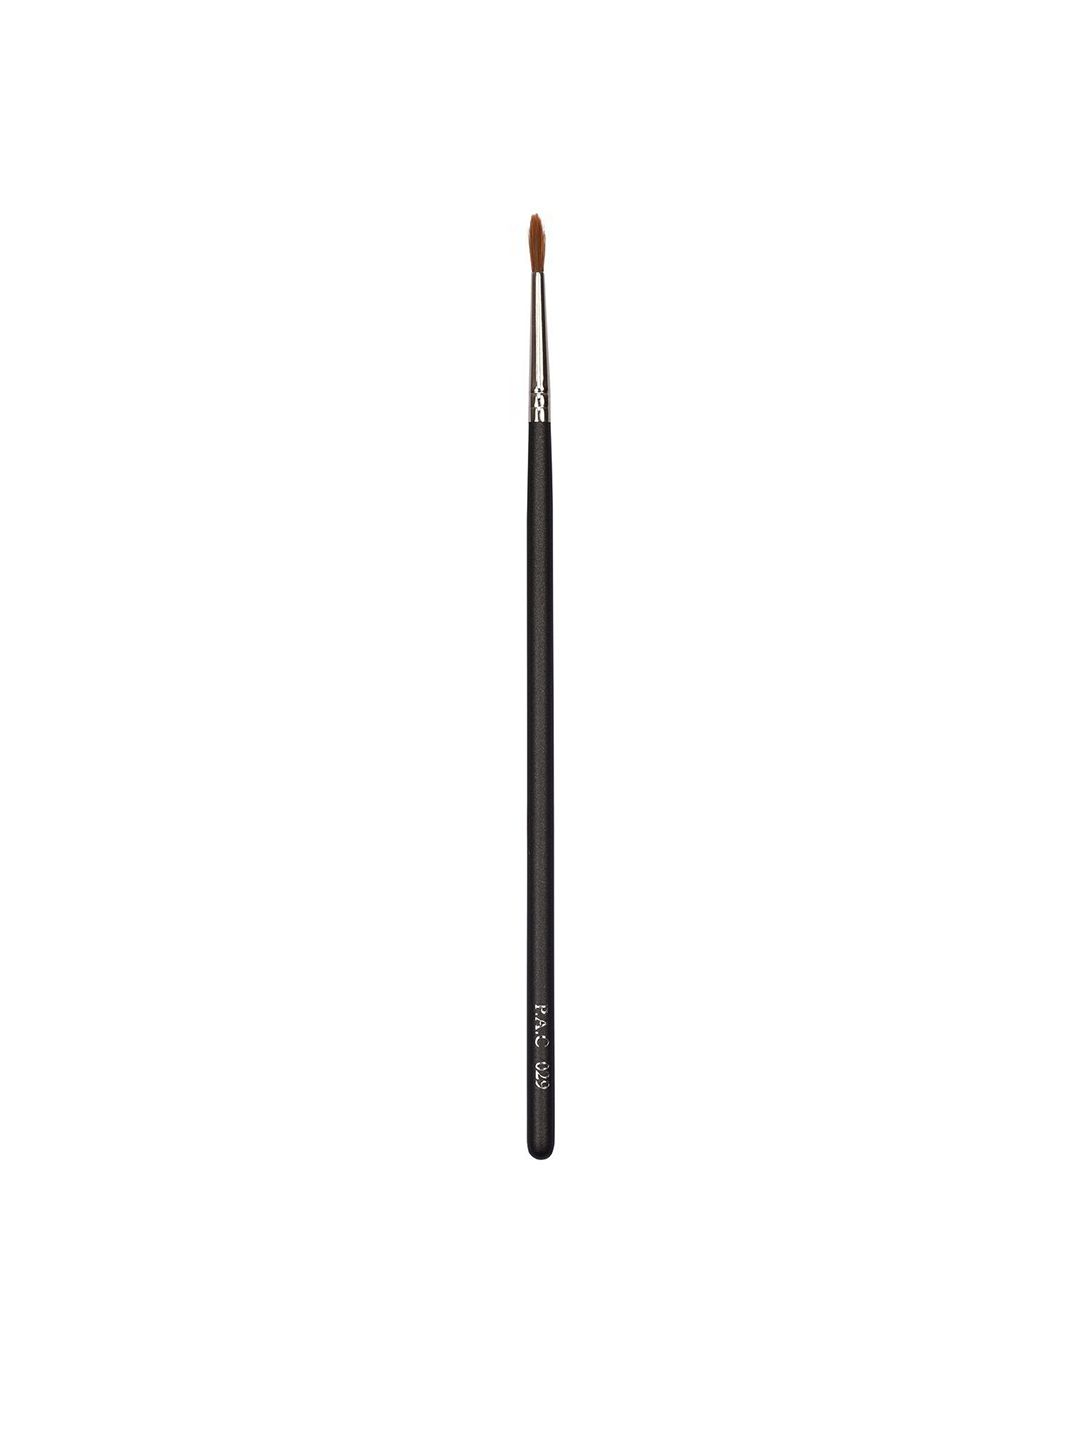 PAC Black Eyeliner Brush - 029 Price in India